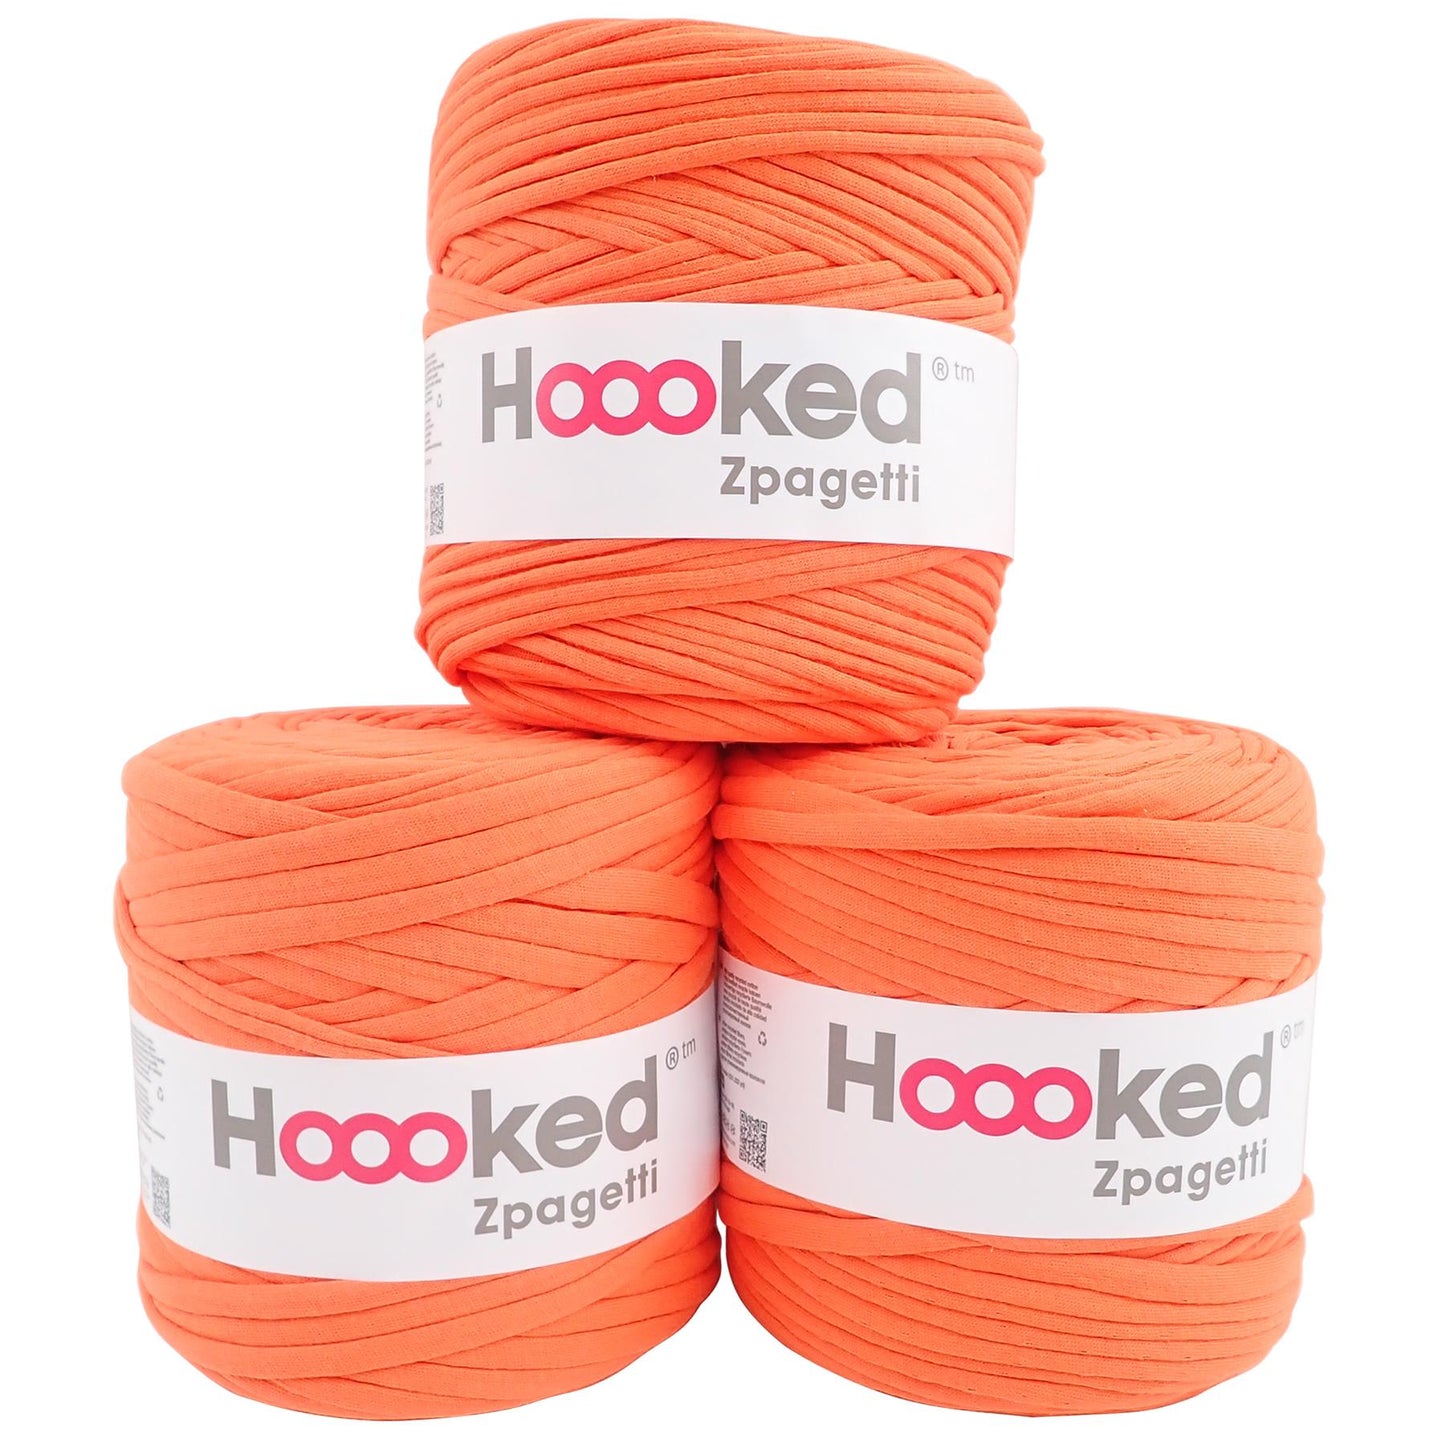 Hoooked Zpagetti Orange Cotton T-Shirt Yarn - 120M 700g (Pack of 3)